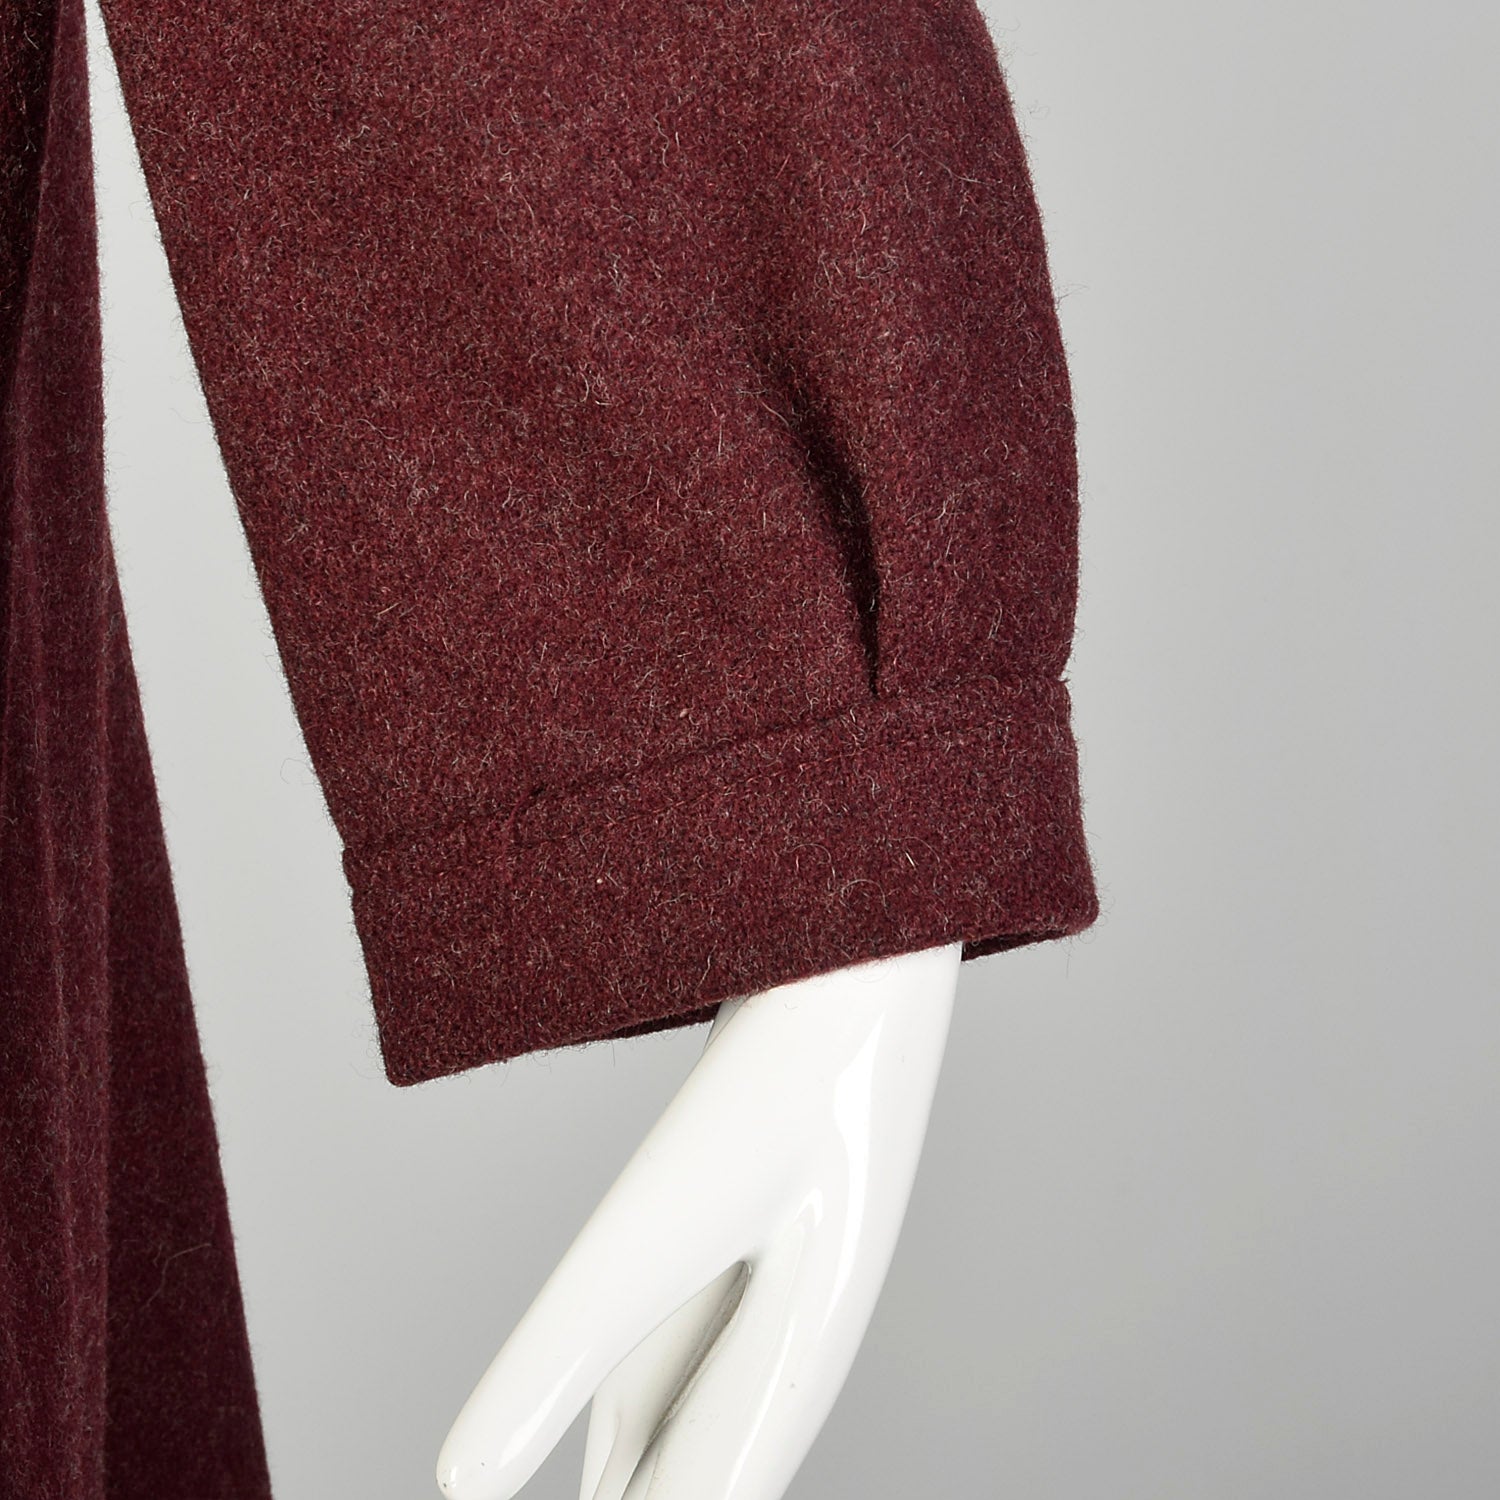 Medium 1970s Swing Coat Wool Maroon Autumn Burgundy Winter Vintage Outerwear